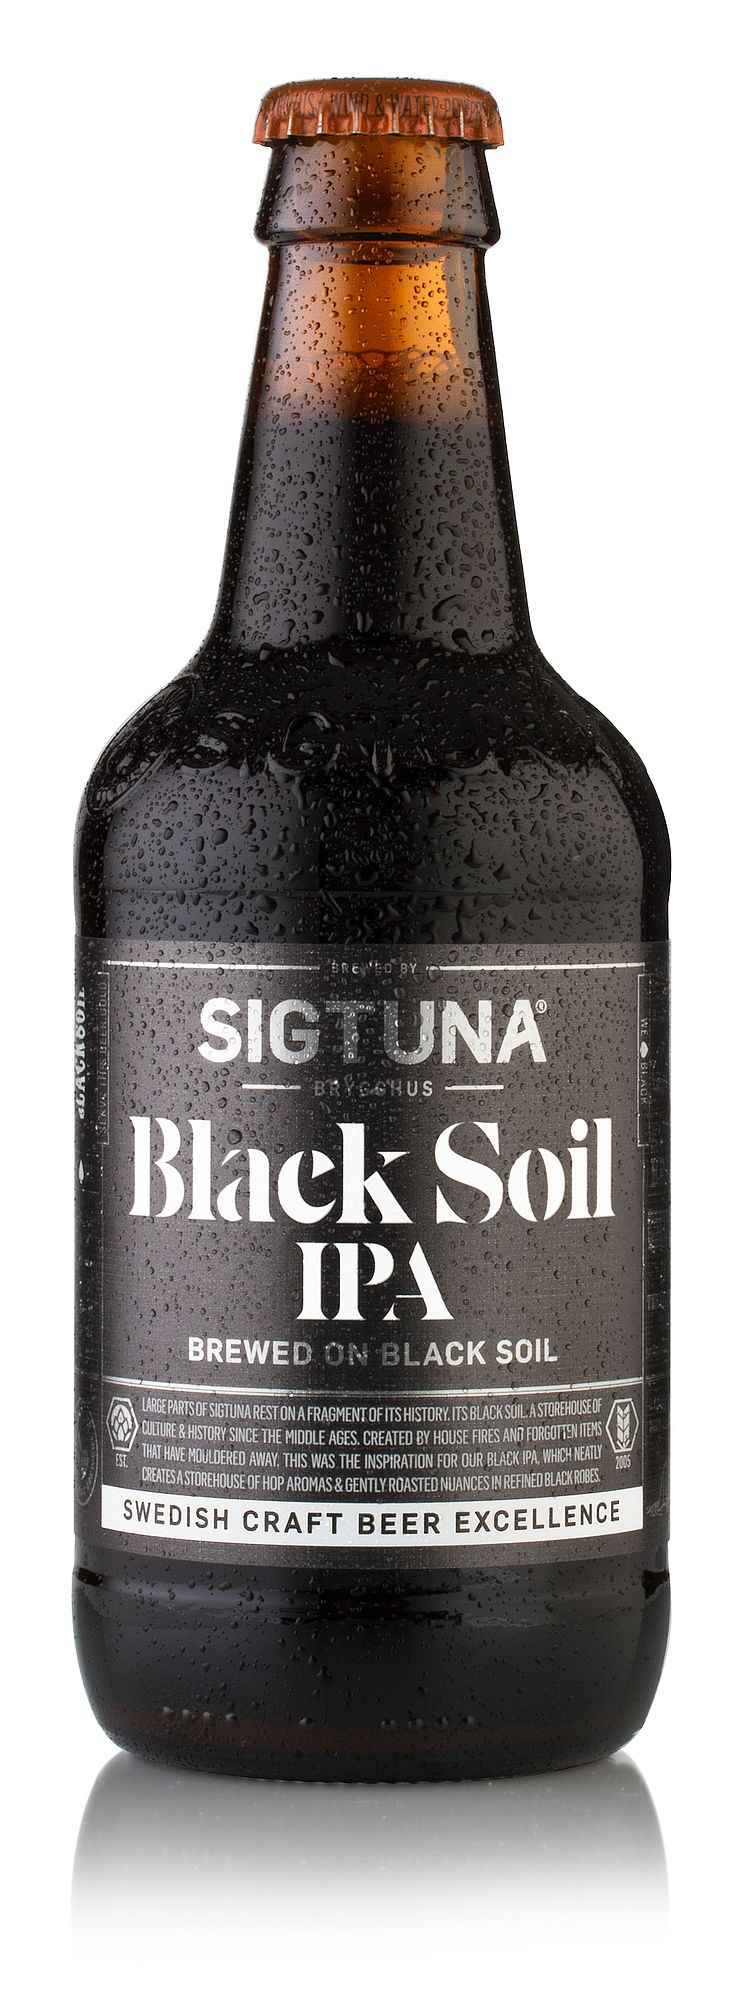 Sigtuna Black Soil IPA